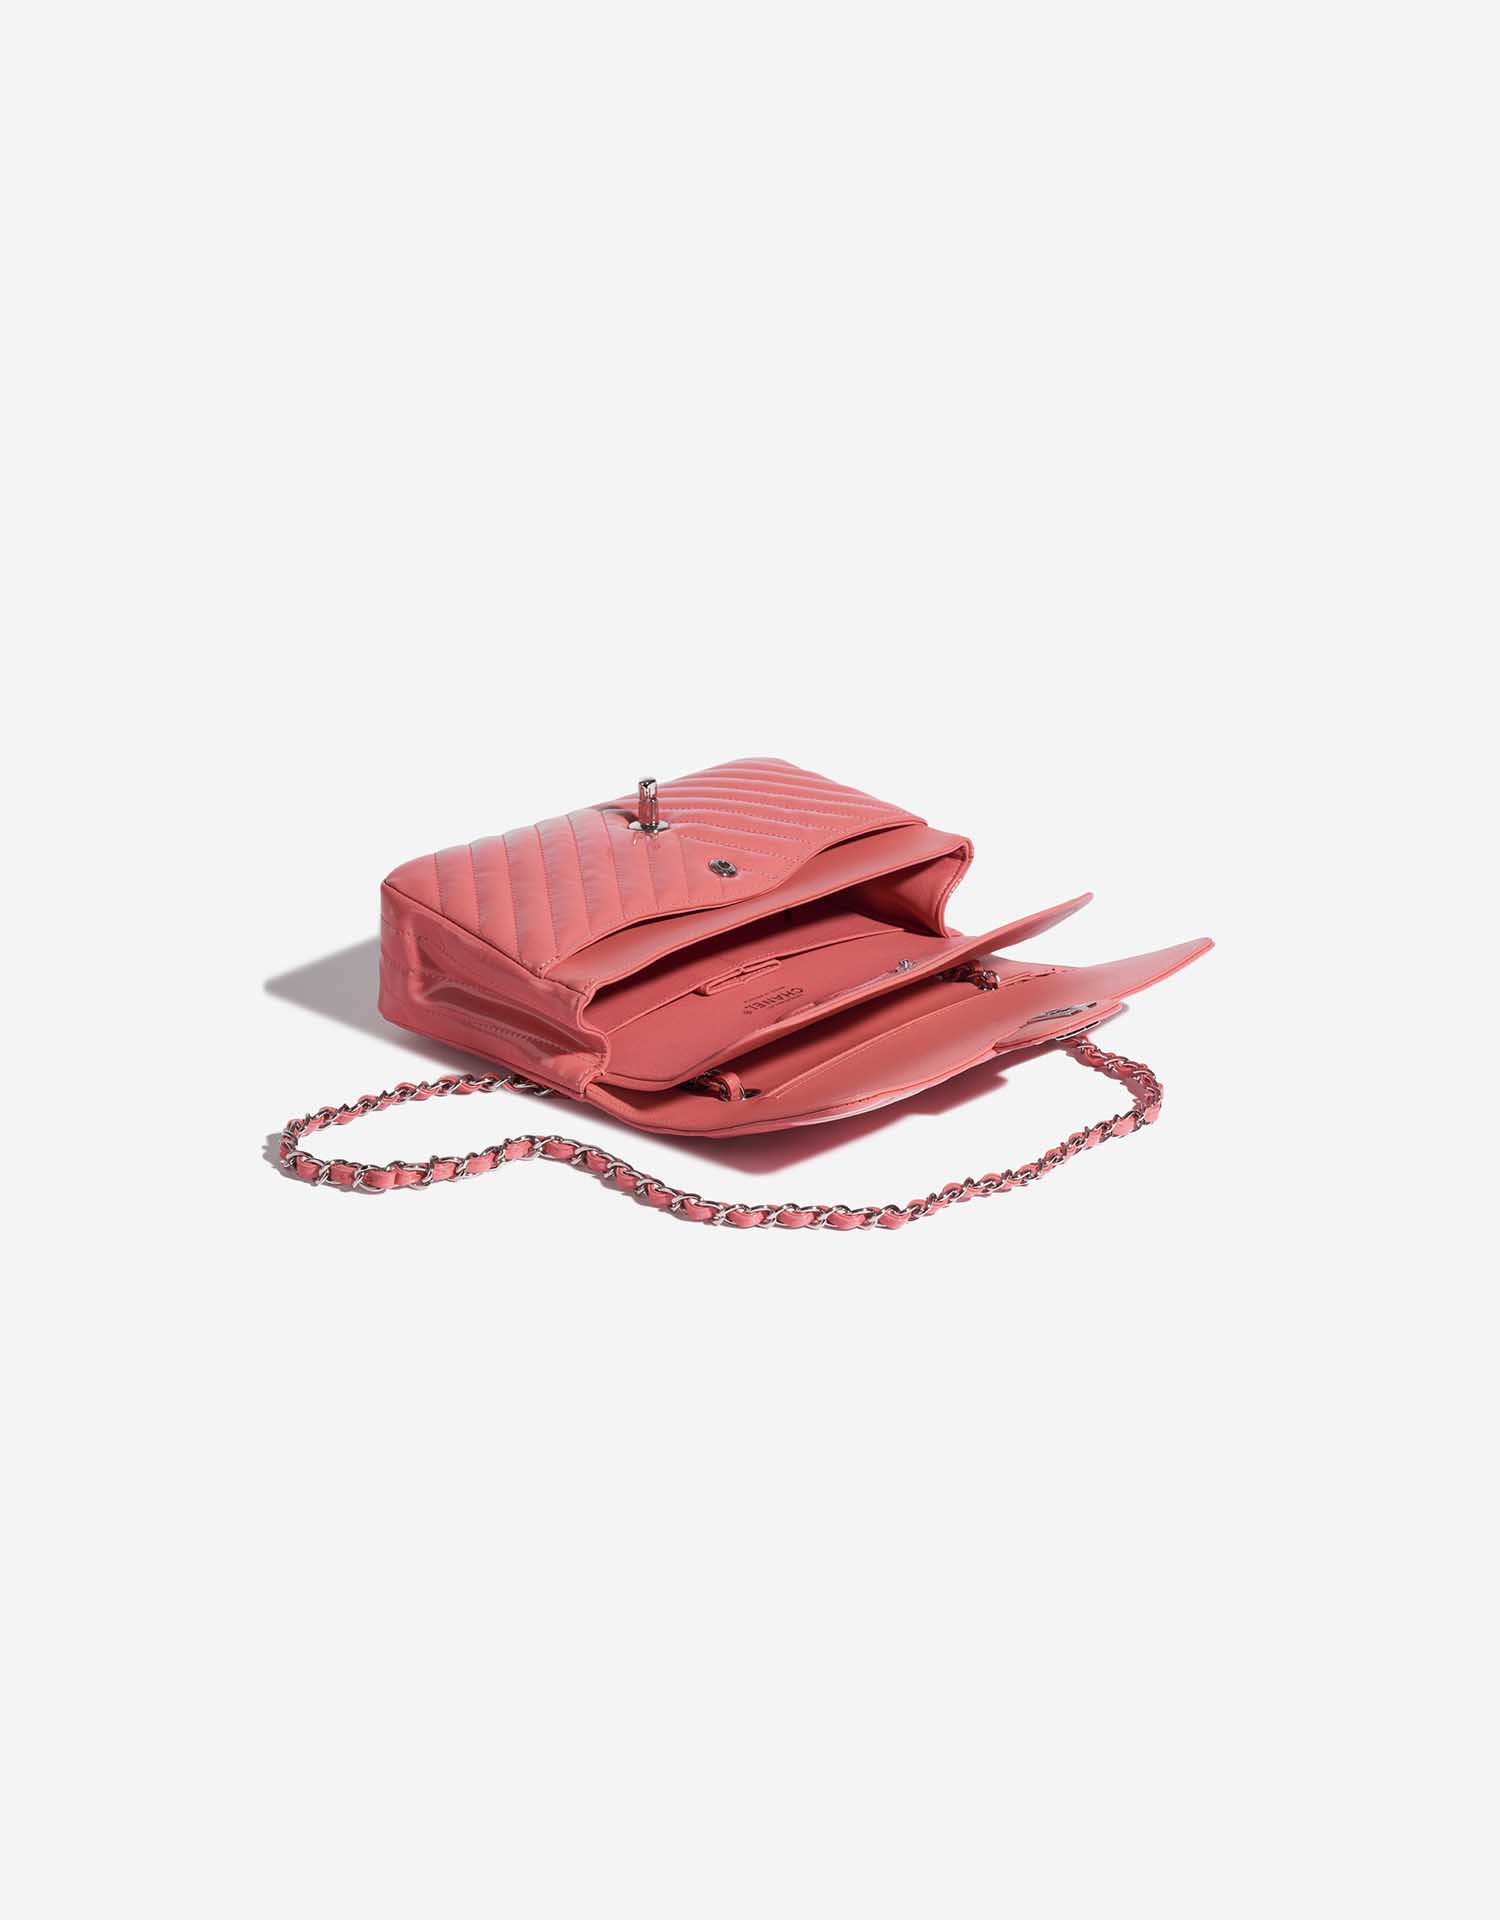 Pre-owned Chanel bag Timeless Medium Patent Pink Pink Inside | Sell your designer bag on Saclab.com